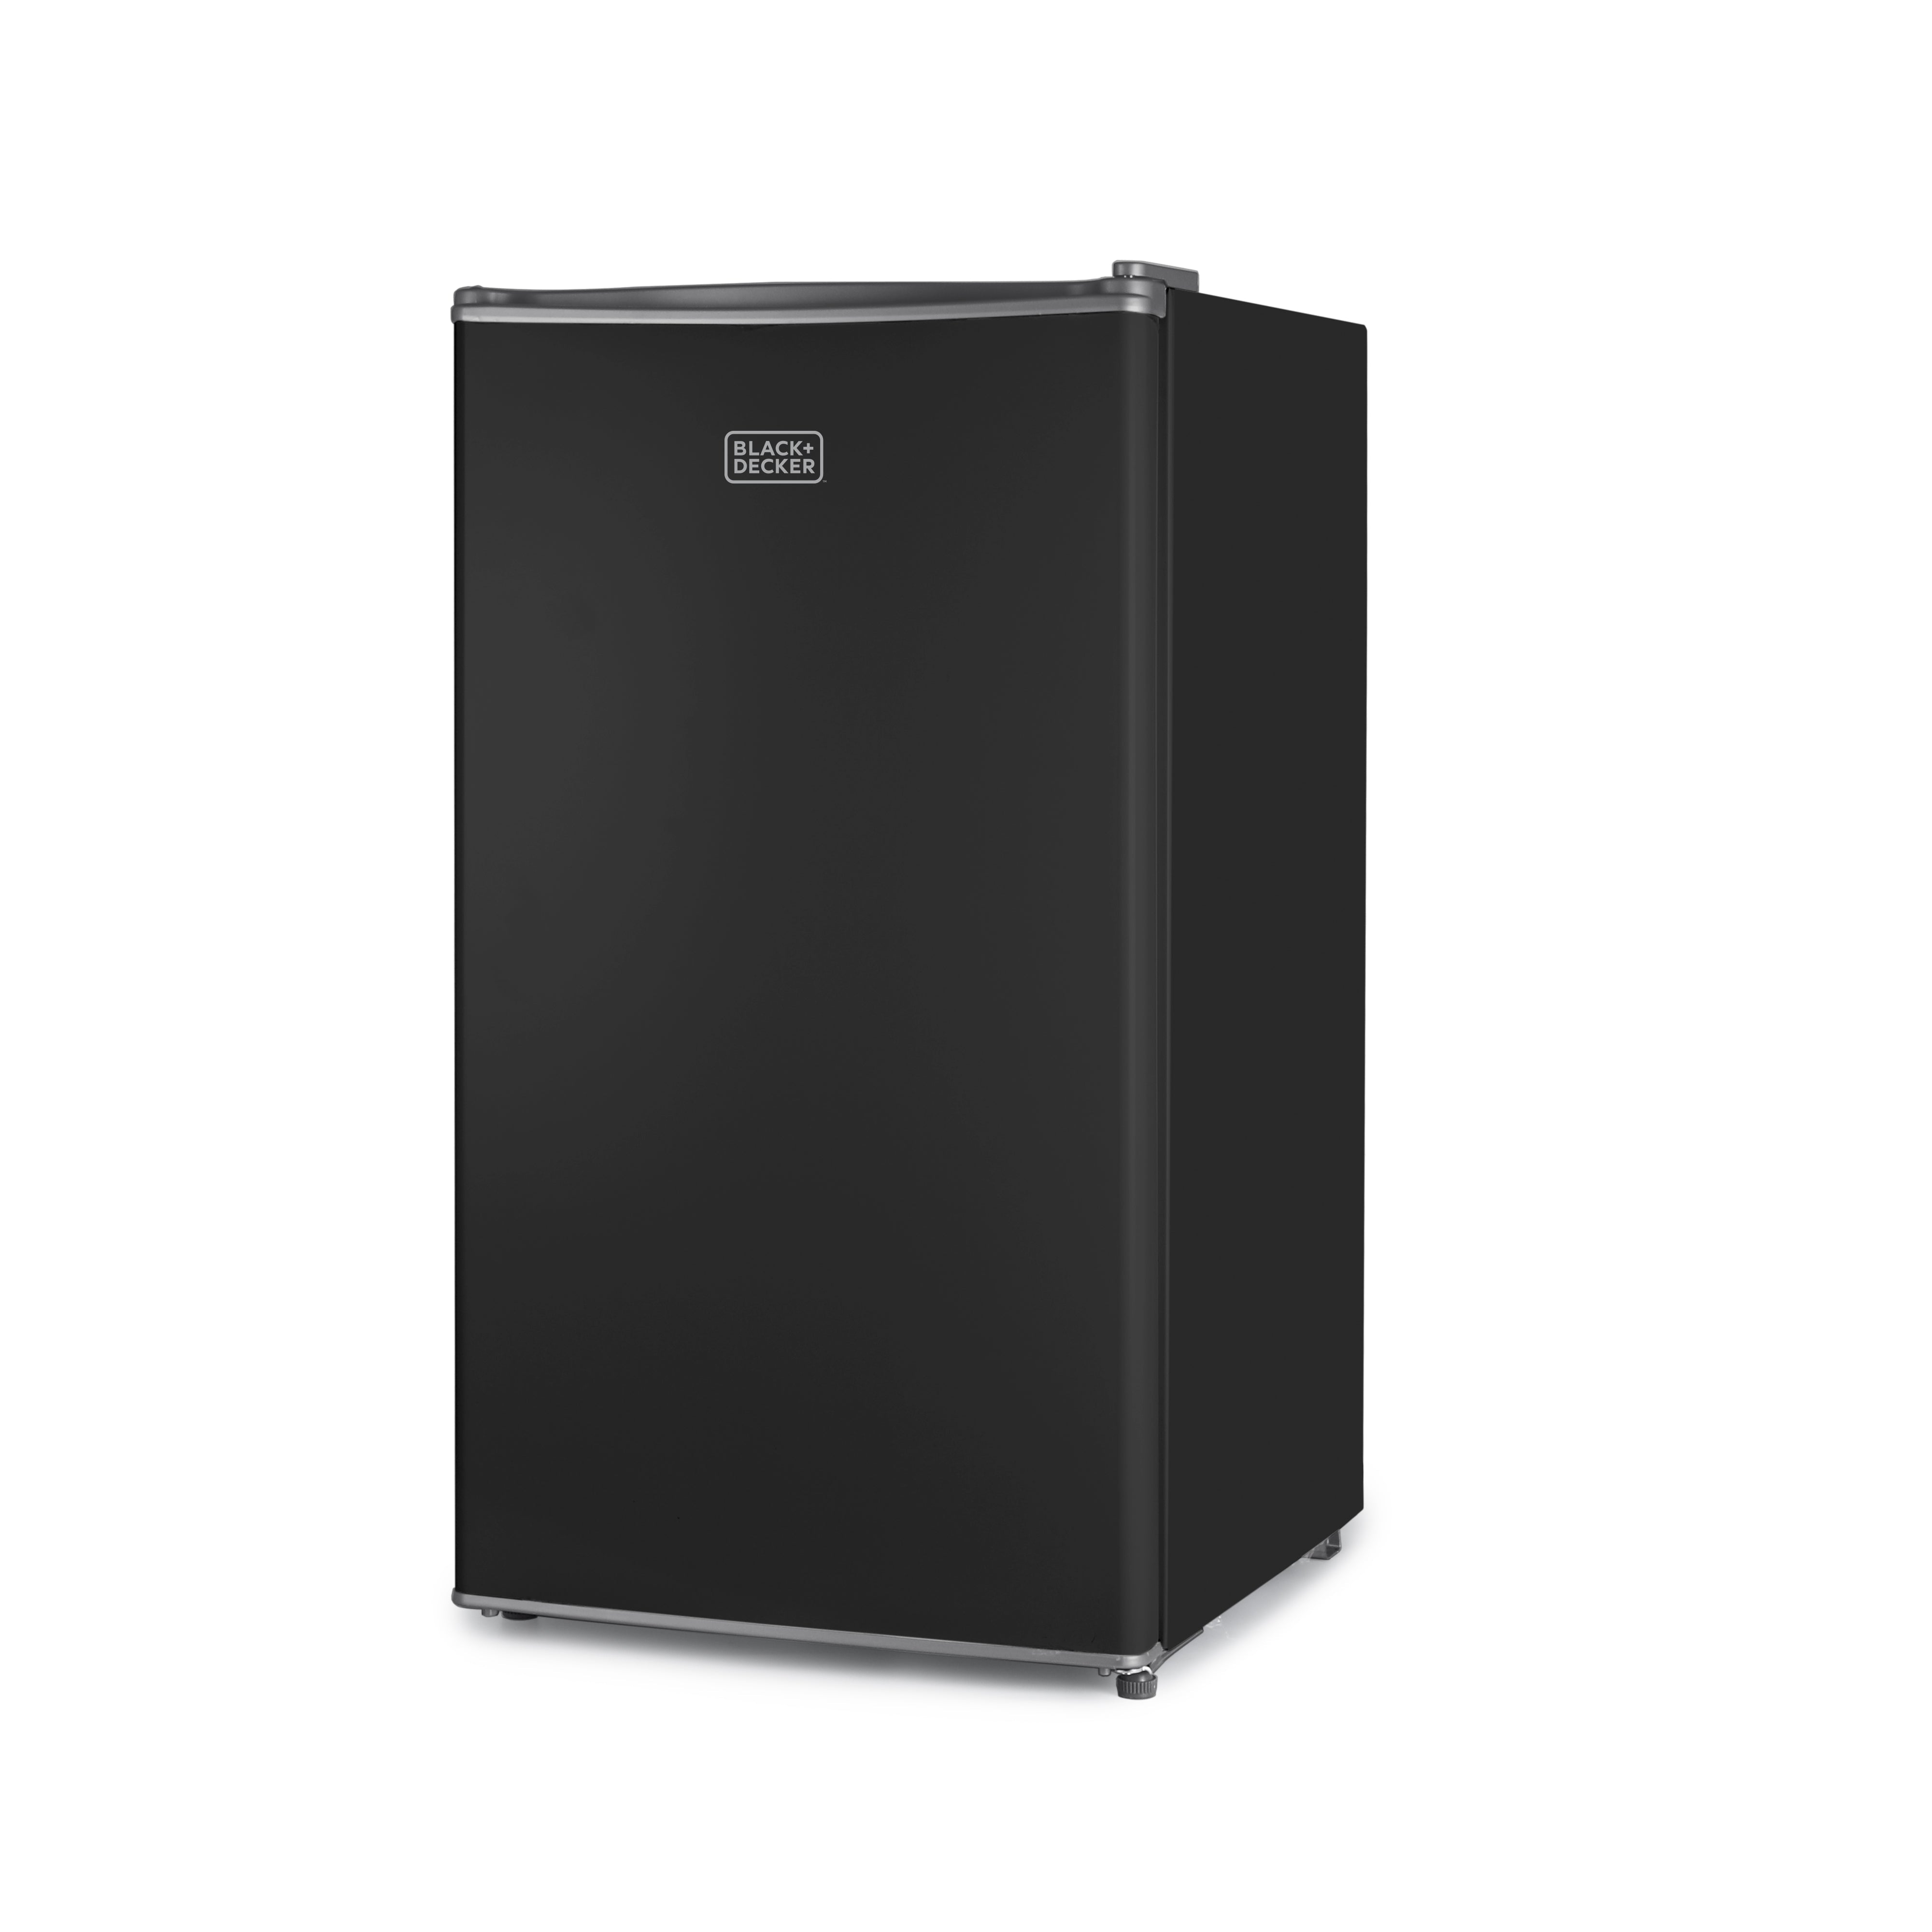 BLACK+DECKER Compact Refrigerator 3.2 Cu. Ft. with True Freezer, Black